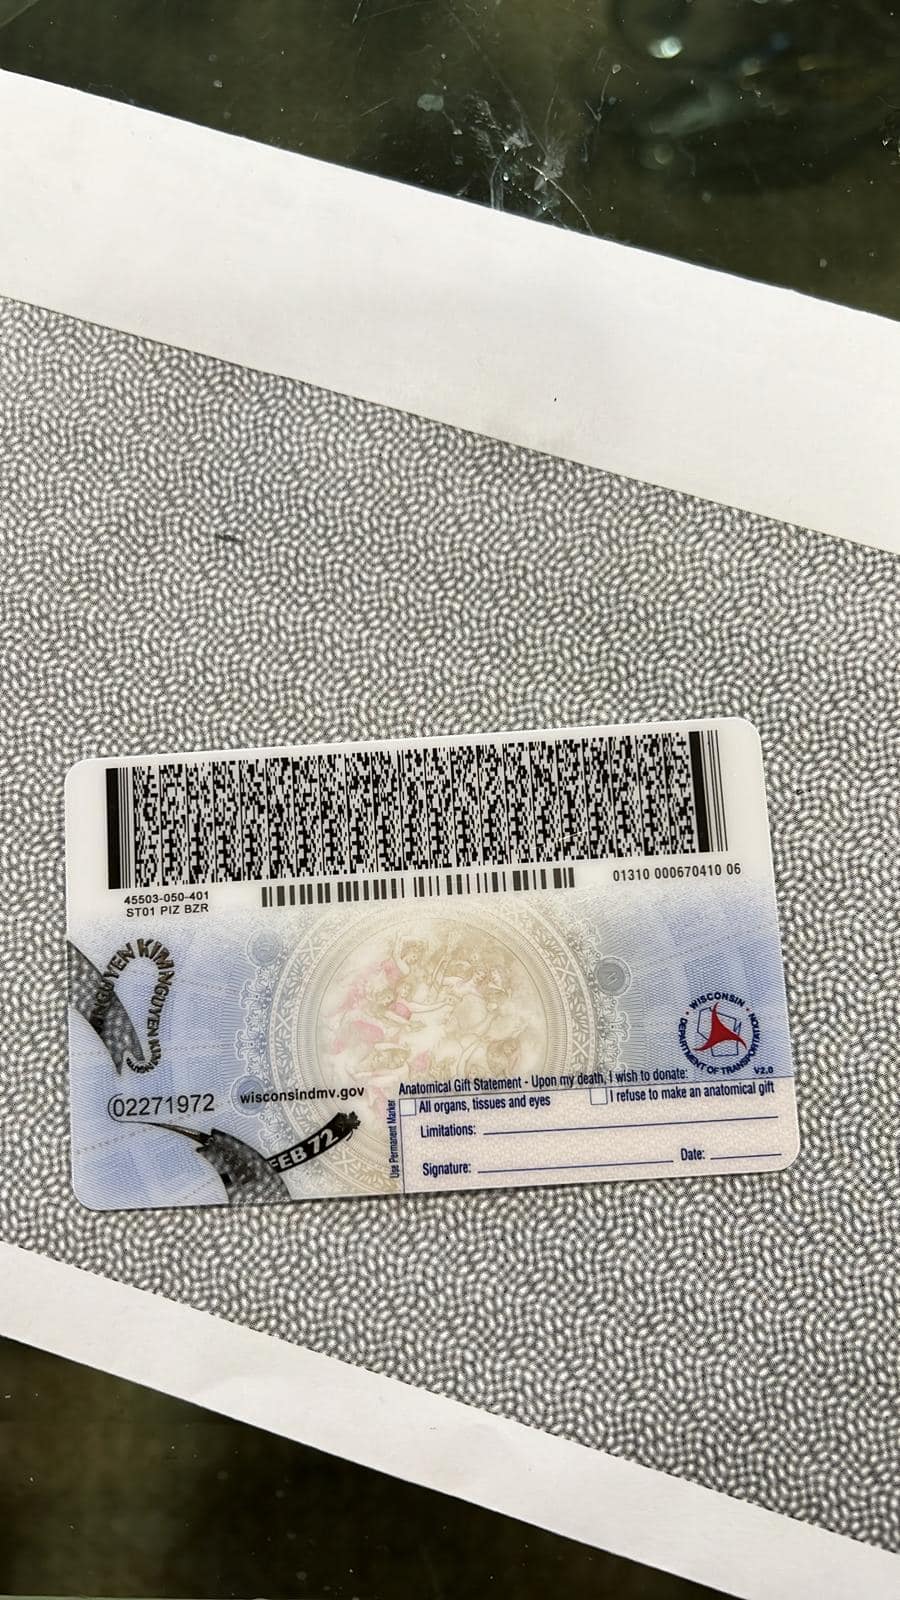 BUY BEST QUALITY FAKE PASSPORT, ID CARD, counterfeit money  - photo